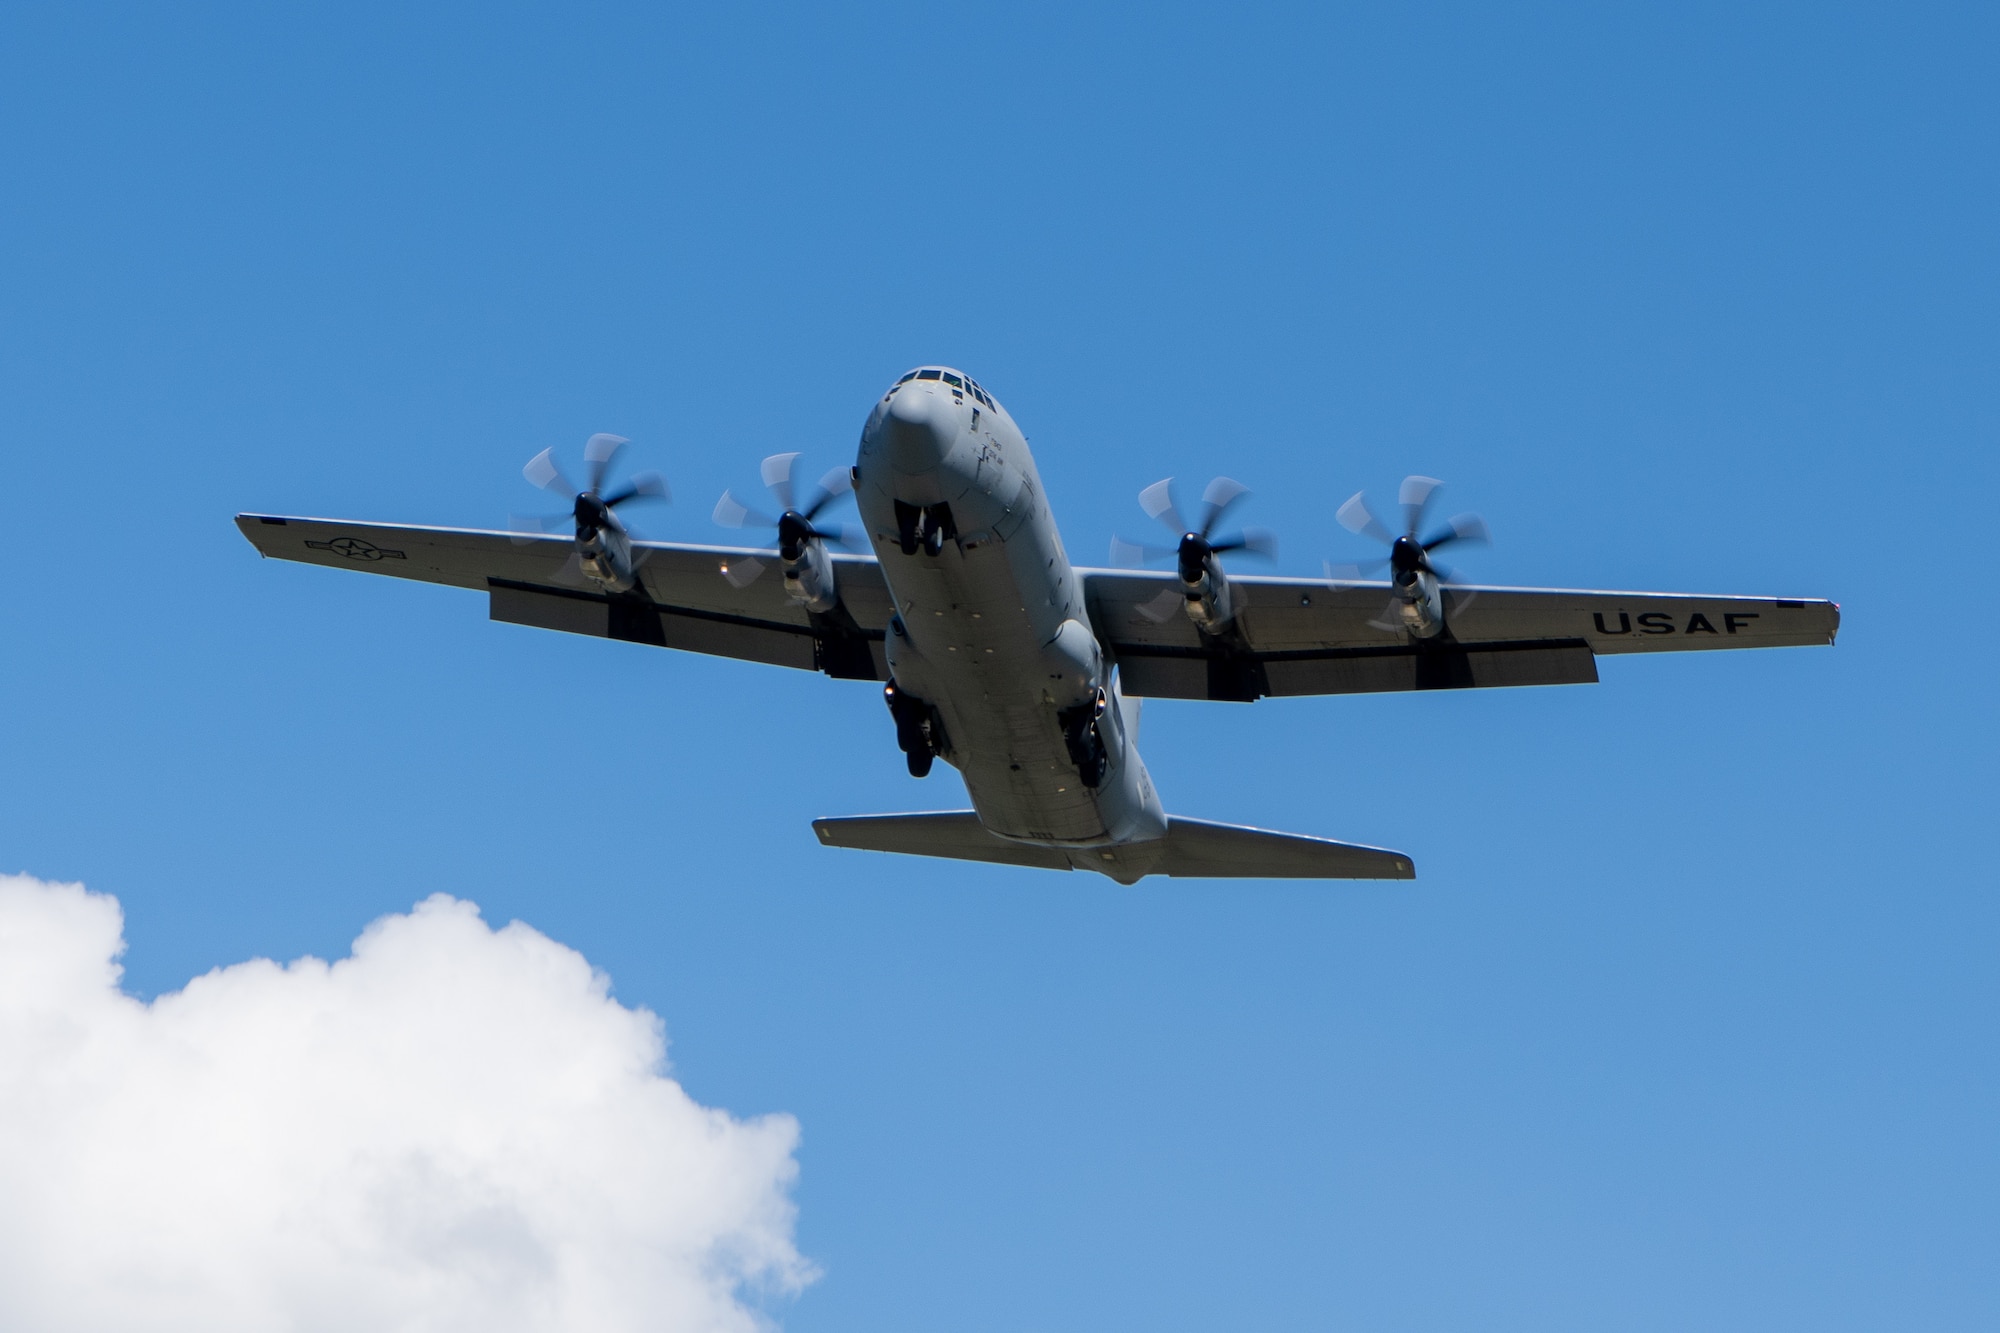 A C-130 flies against a clear blue sky.